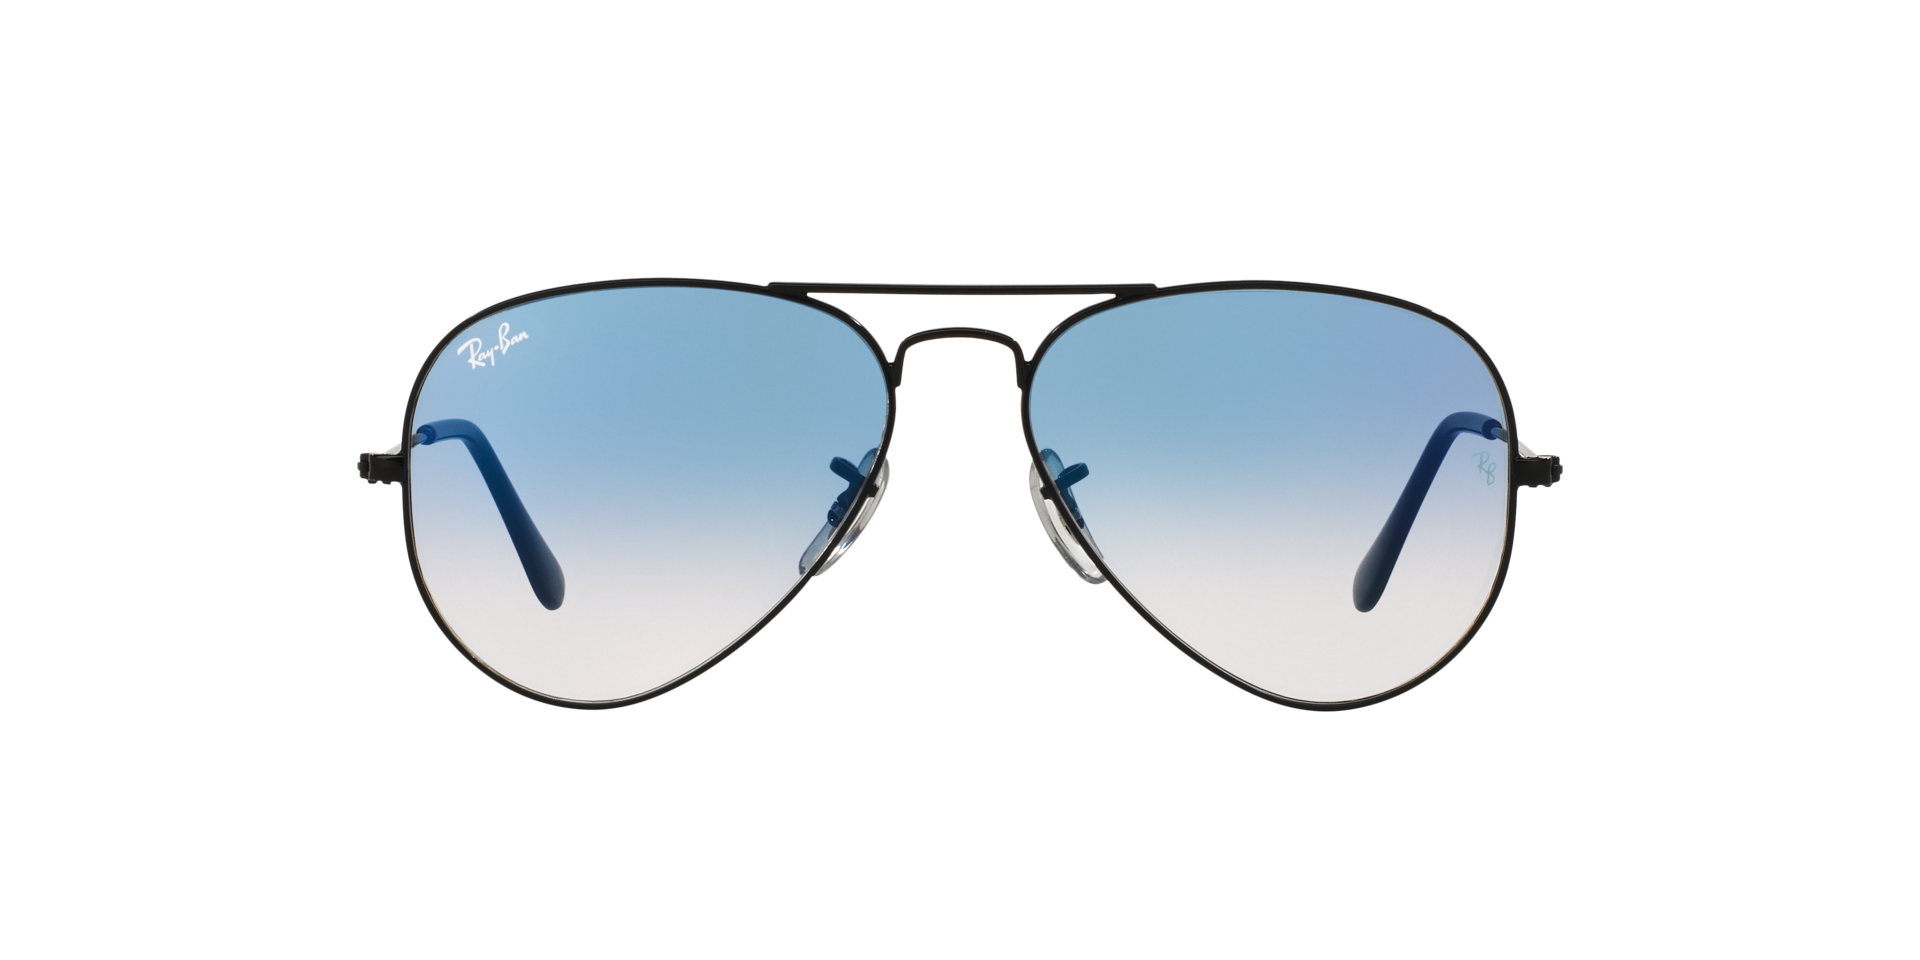 Buy Ray-Ban Sunglasses Online in Australia | Eyesports – Eyesports®